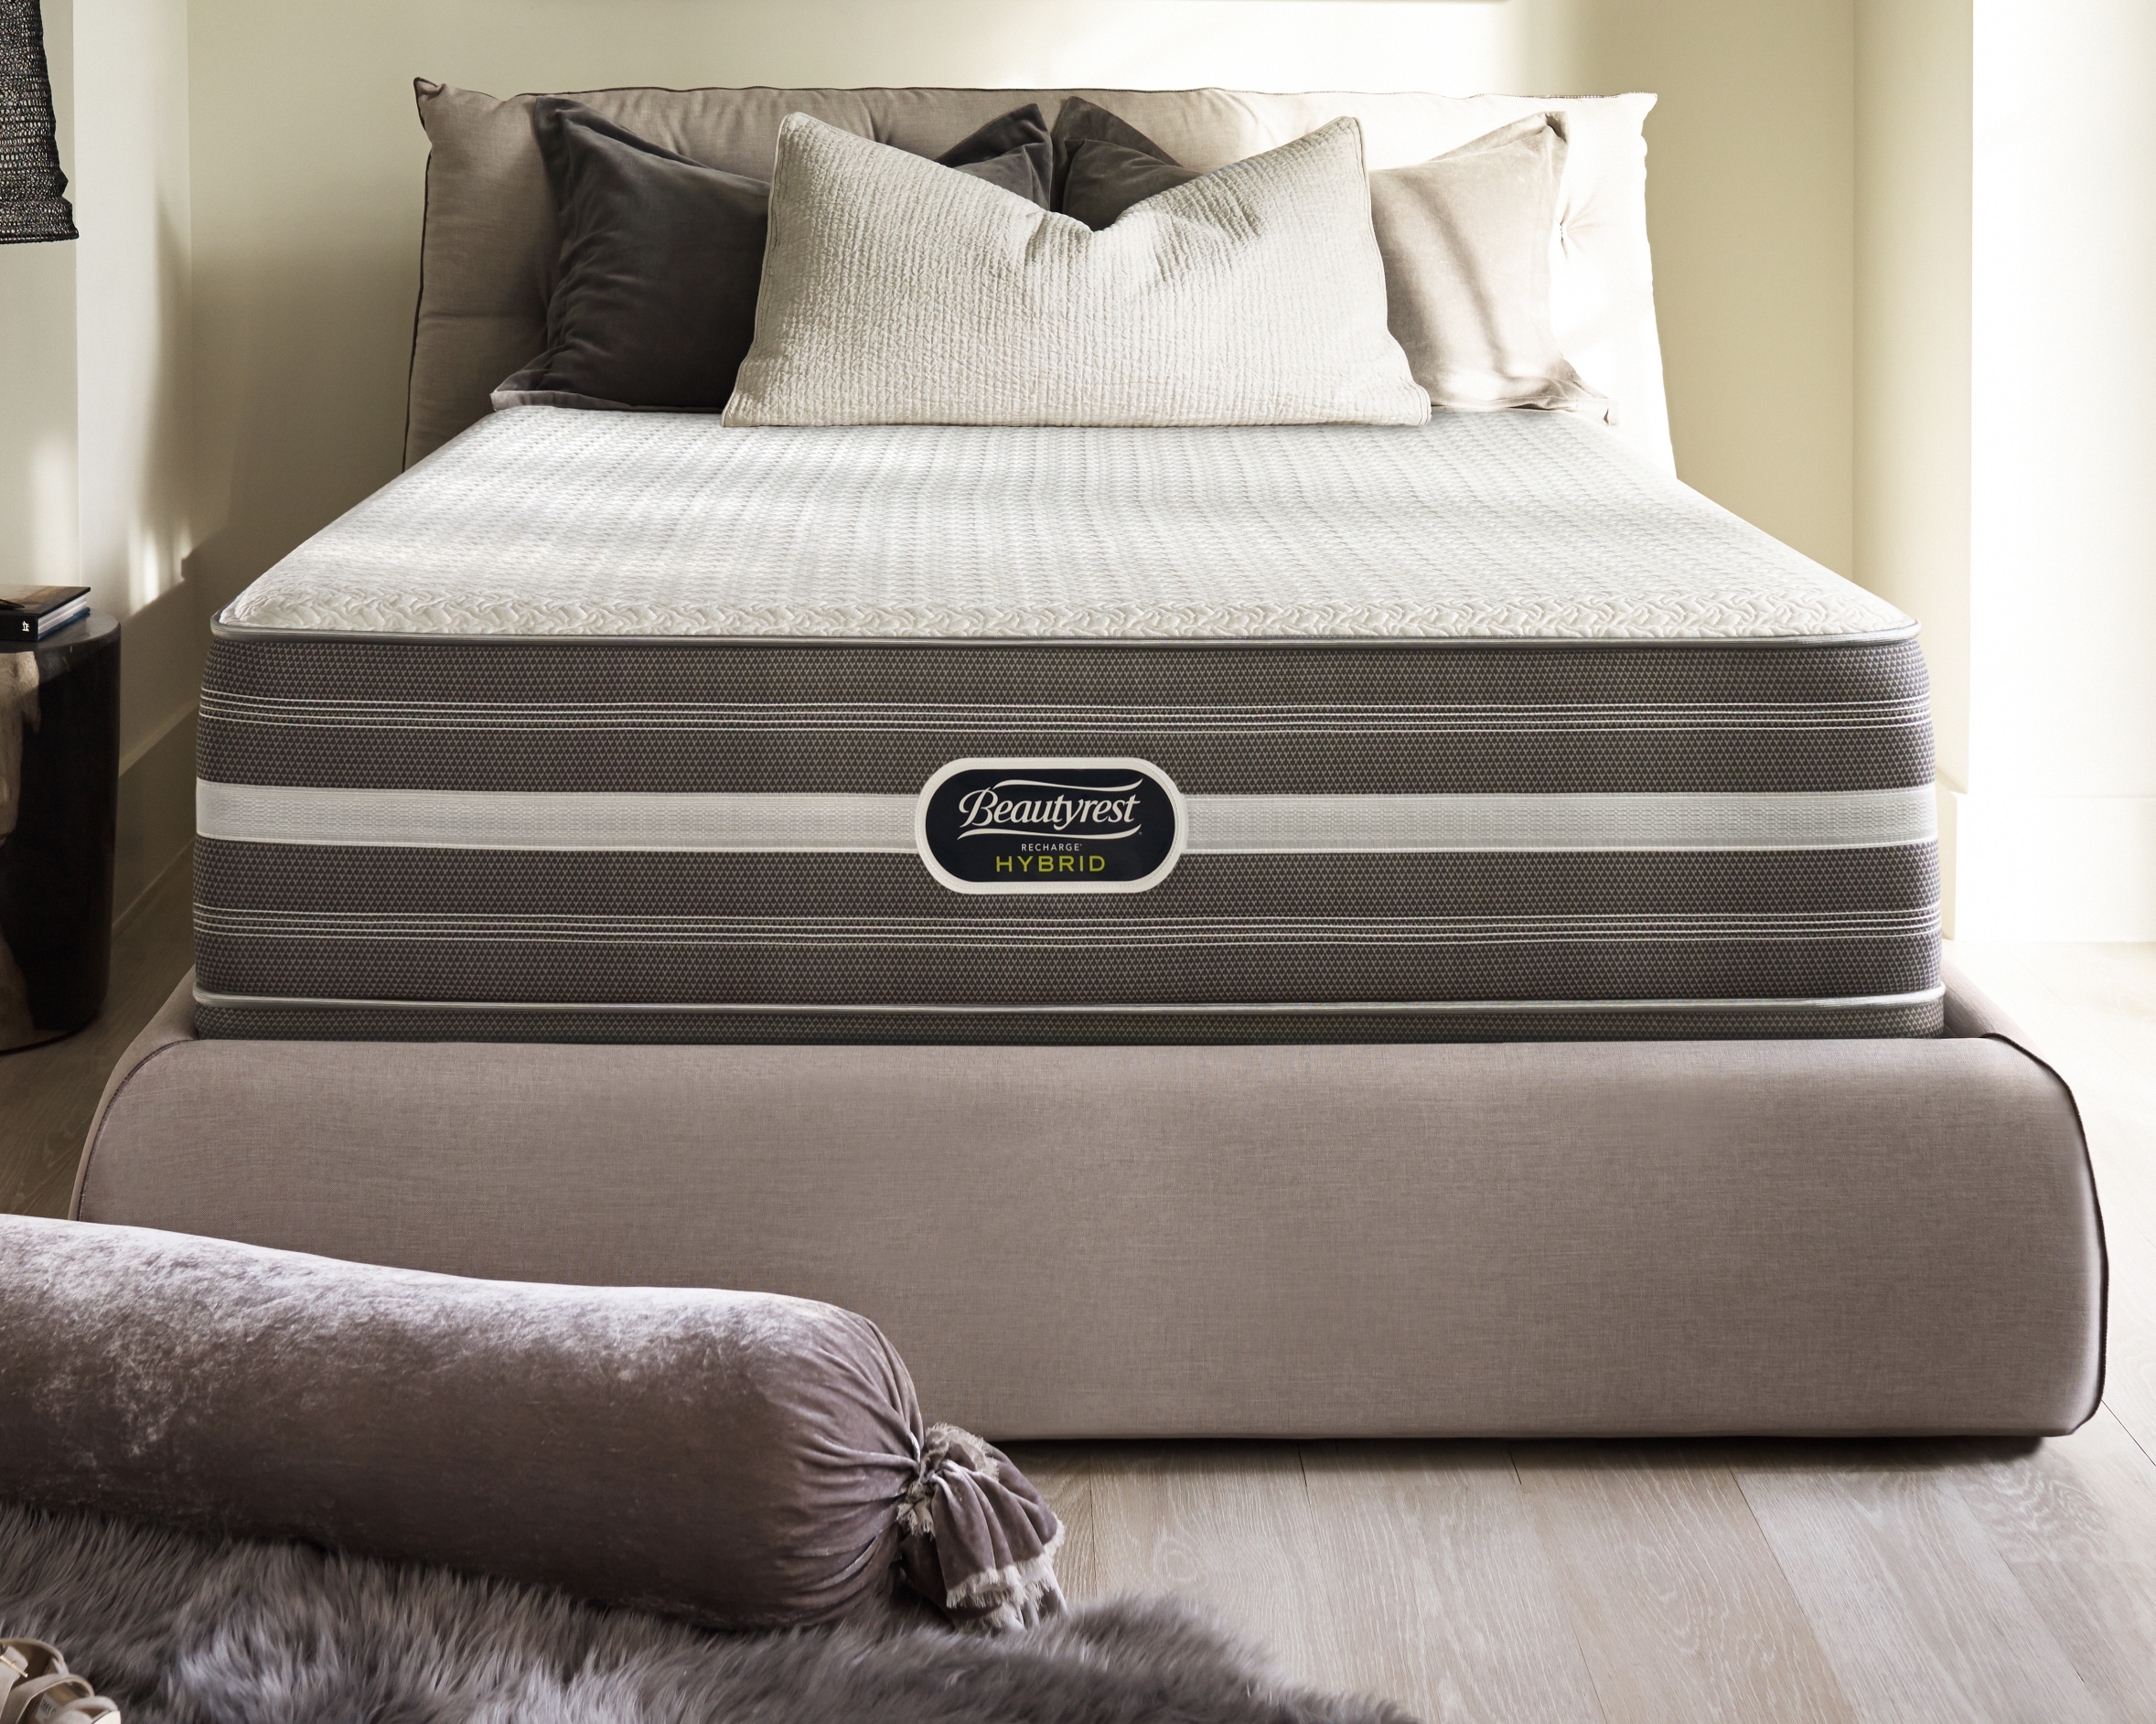 beautyrest recharge hybrid boco raton ultimate plush mattress